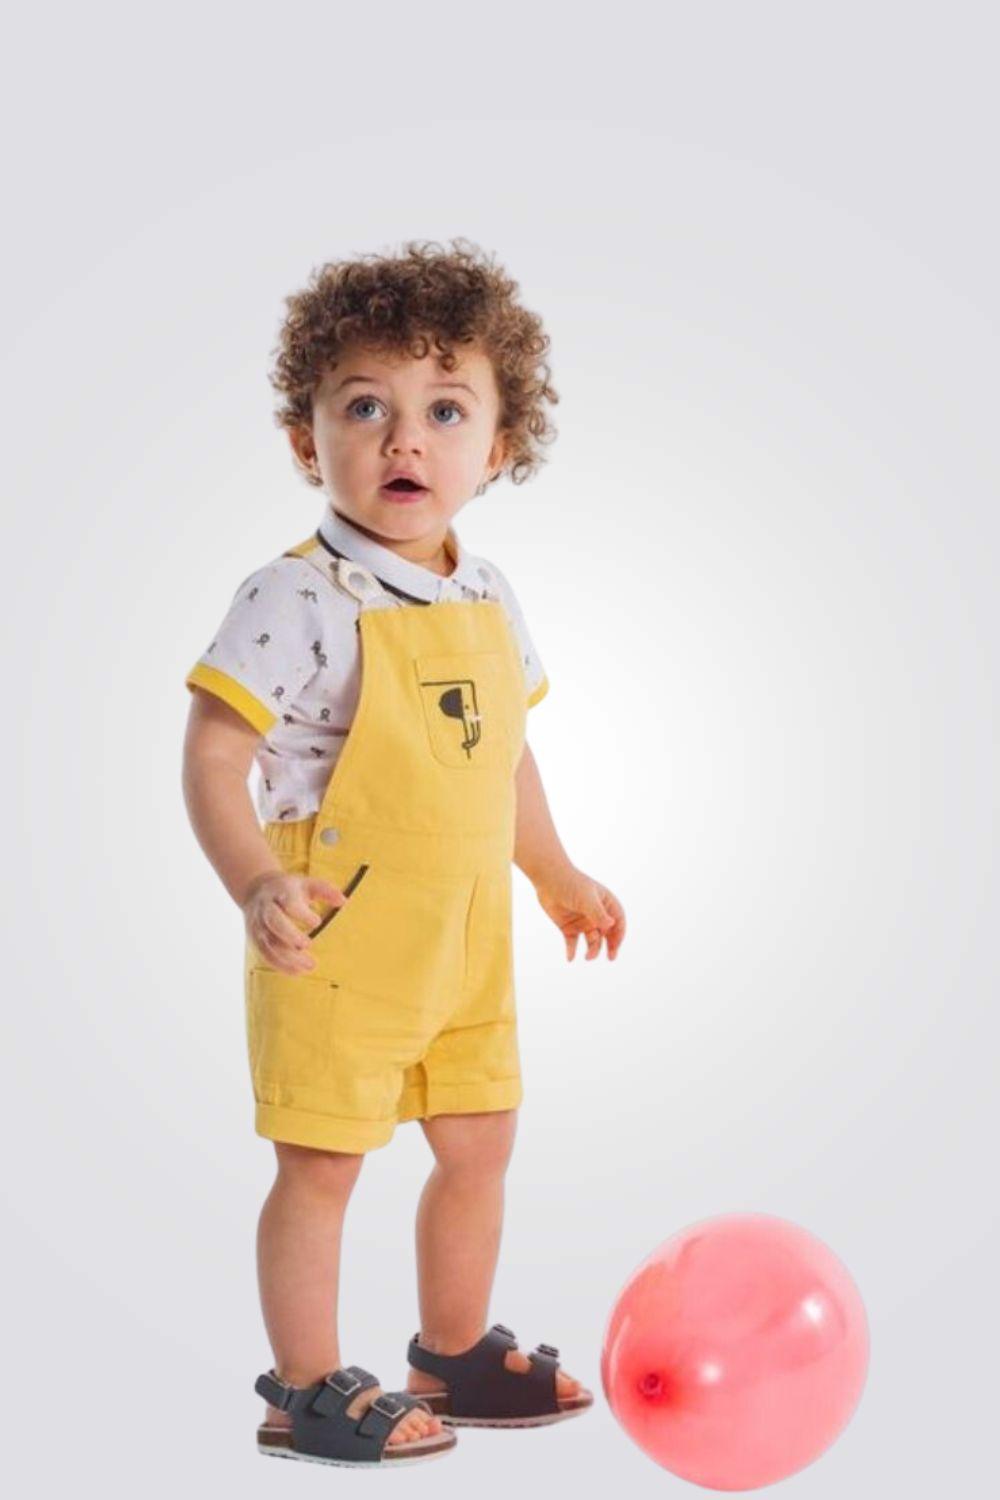 OBAIBI - אוברול בצבע צהוב לתינוקות - MASHBIR//365